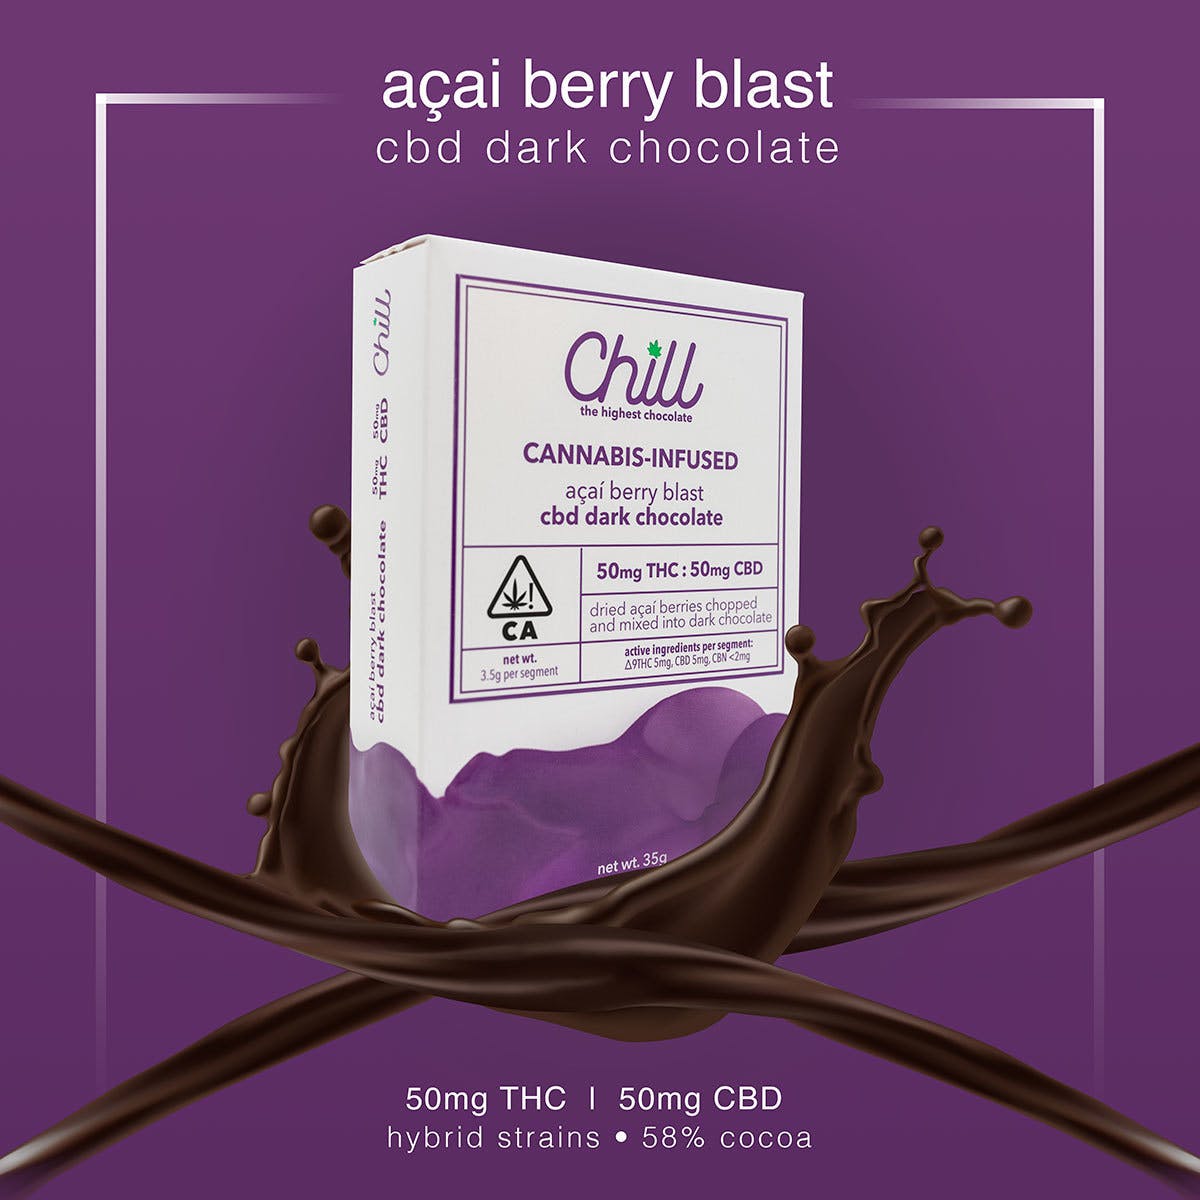 Chill Cannabis Infused Acai Berry Blast CBD Dark Chocolate